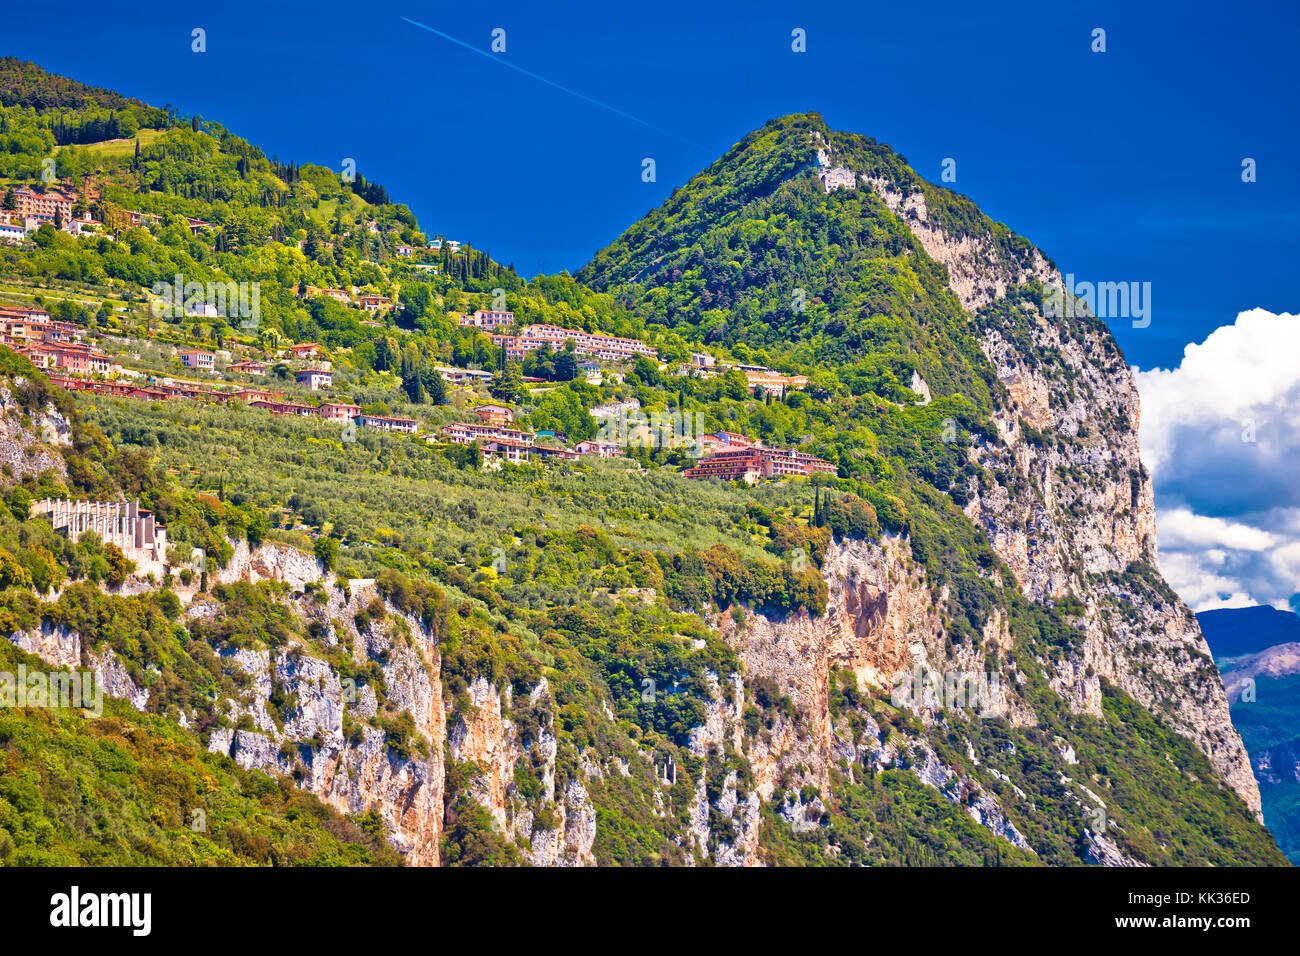 Garda lak cliffside villages of Gardola and Oldesio with Madonna di Montecastello hermitage on the ridge, Lombardy, Italy Stock Photo